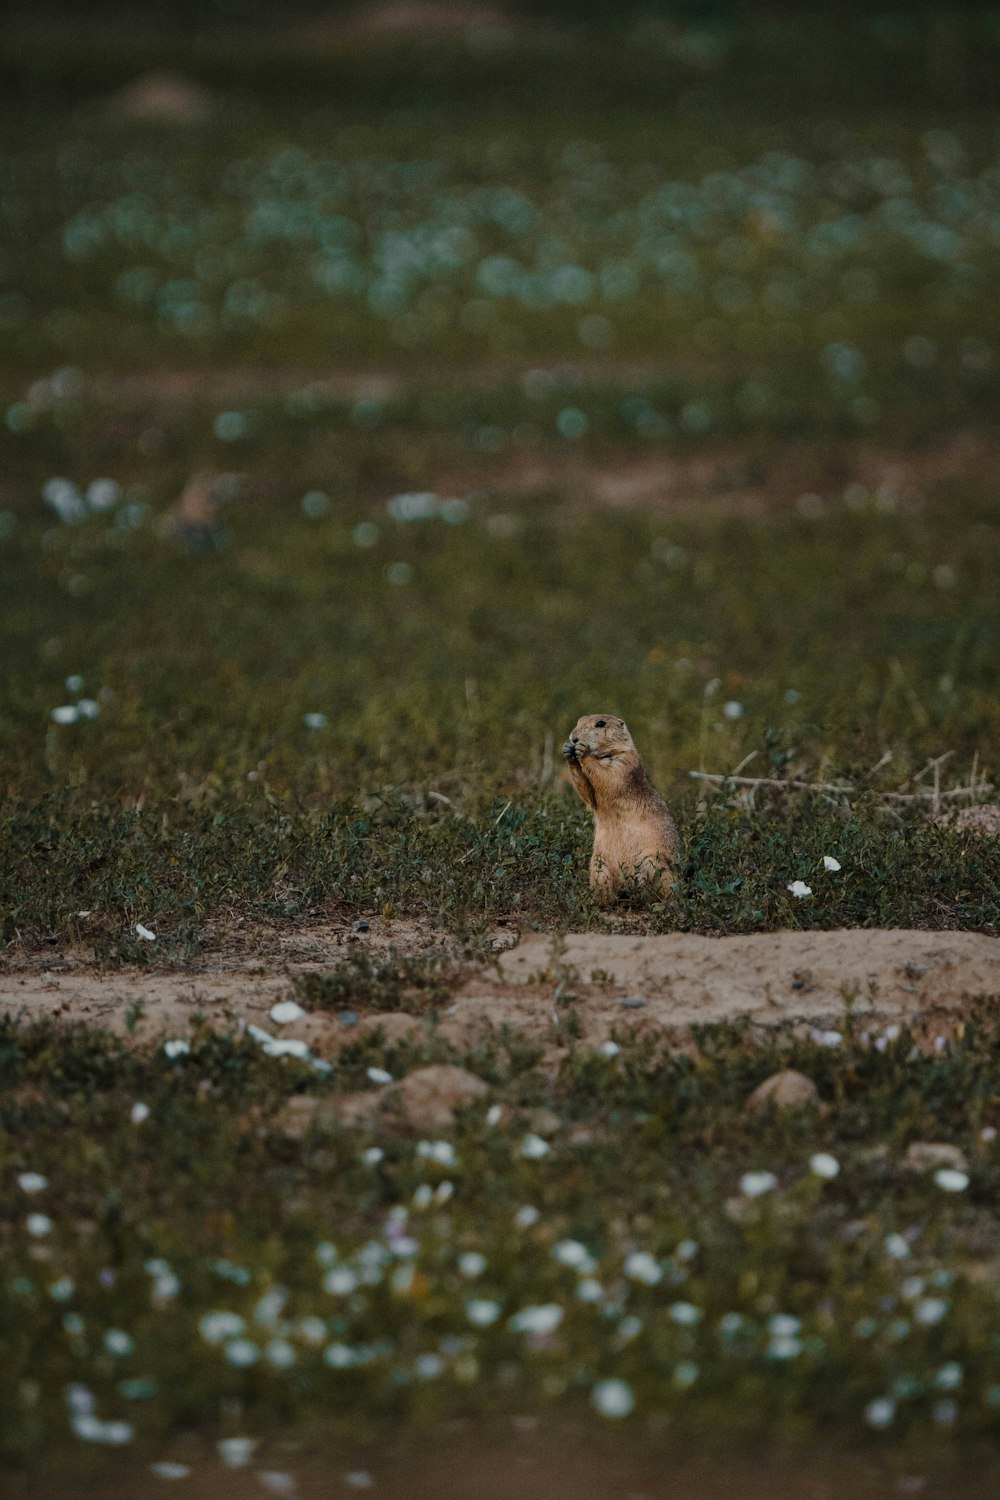 a small animal in a grassy area